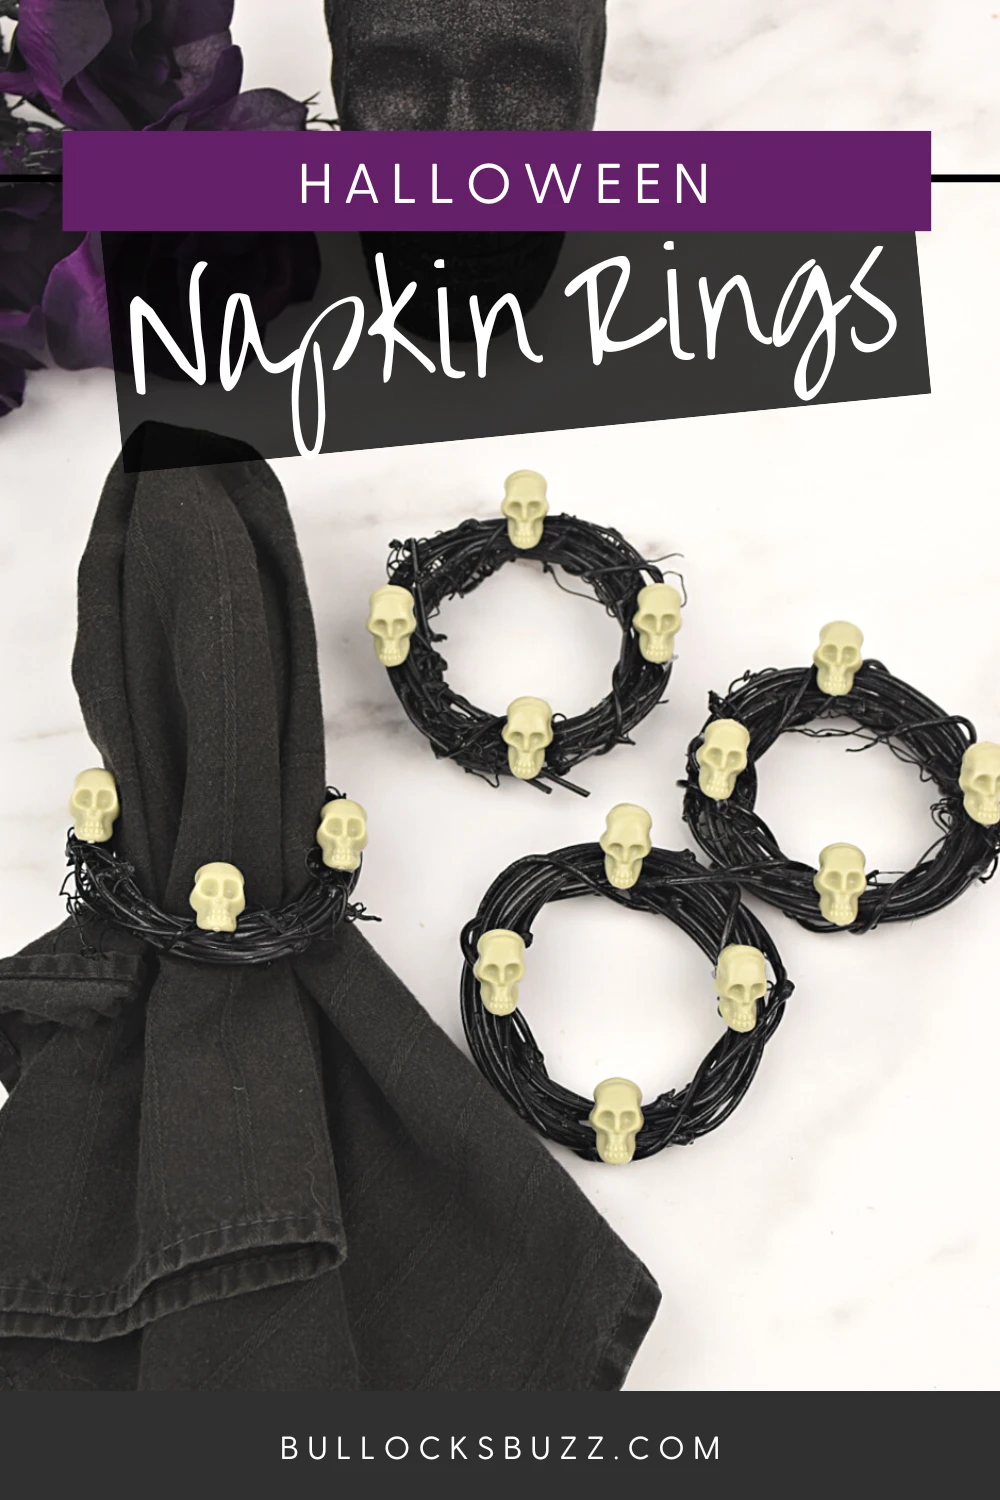 Halloween napkin rings next to a ring on a black napkin